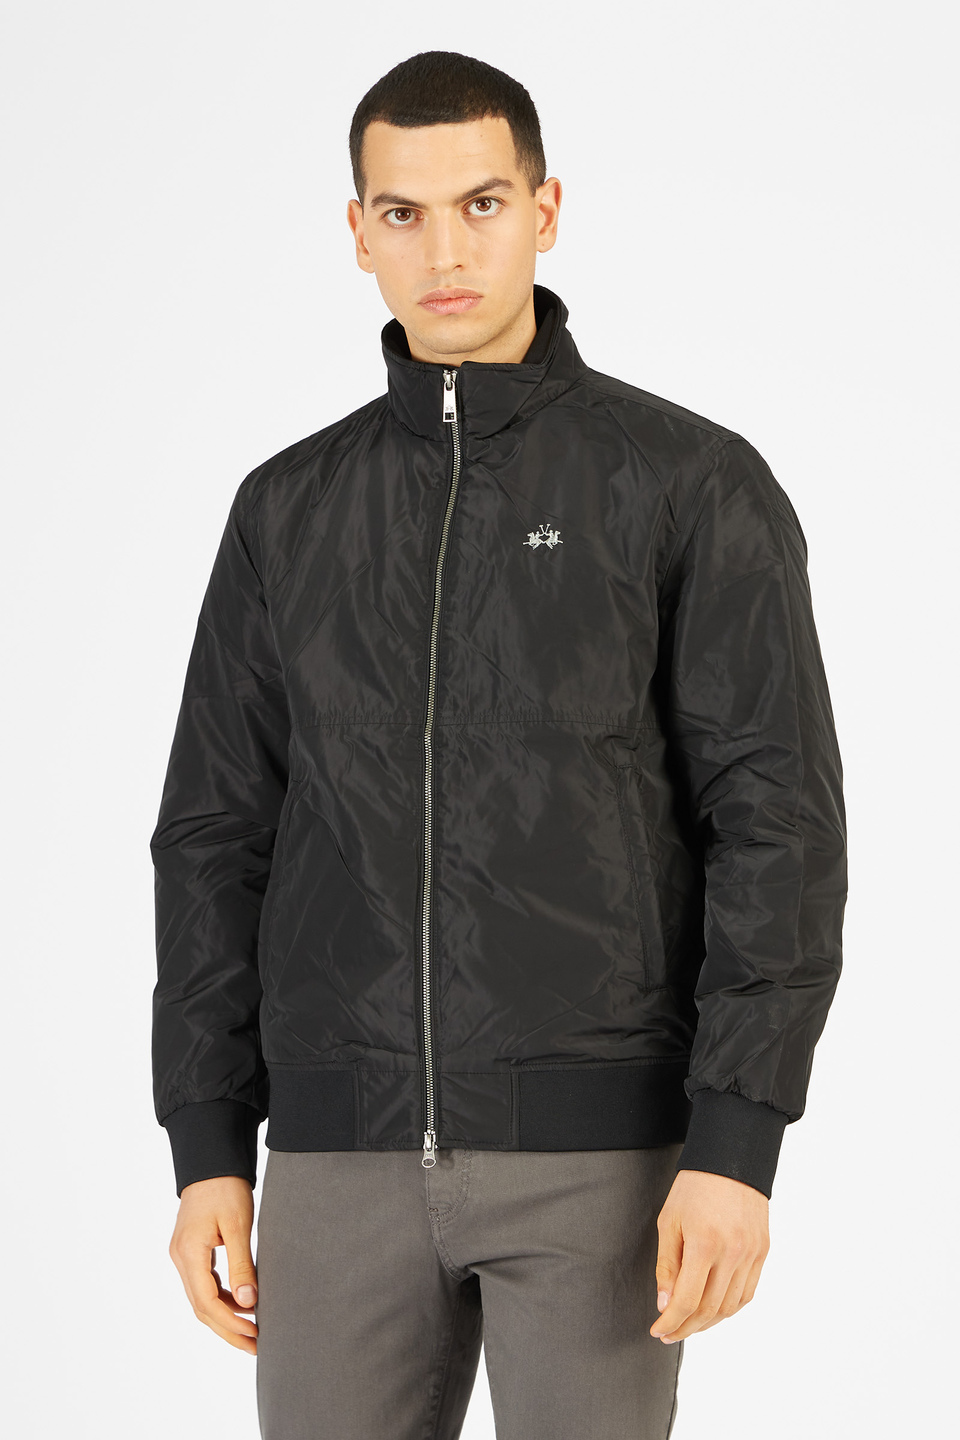 Men’s jacket in nylon regular fit model | La Martina - Official Online Shop